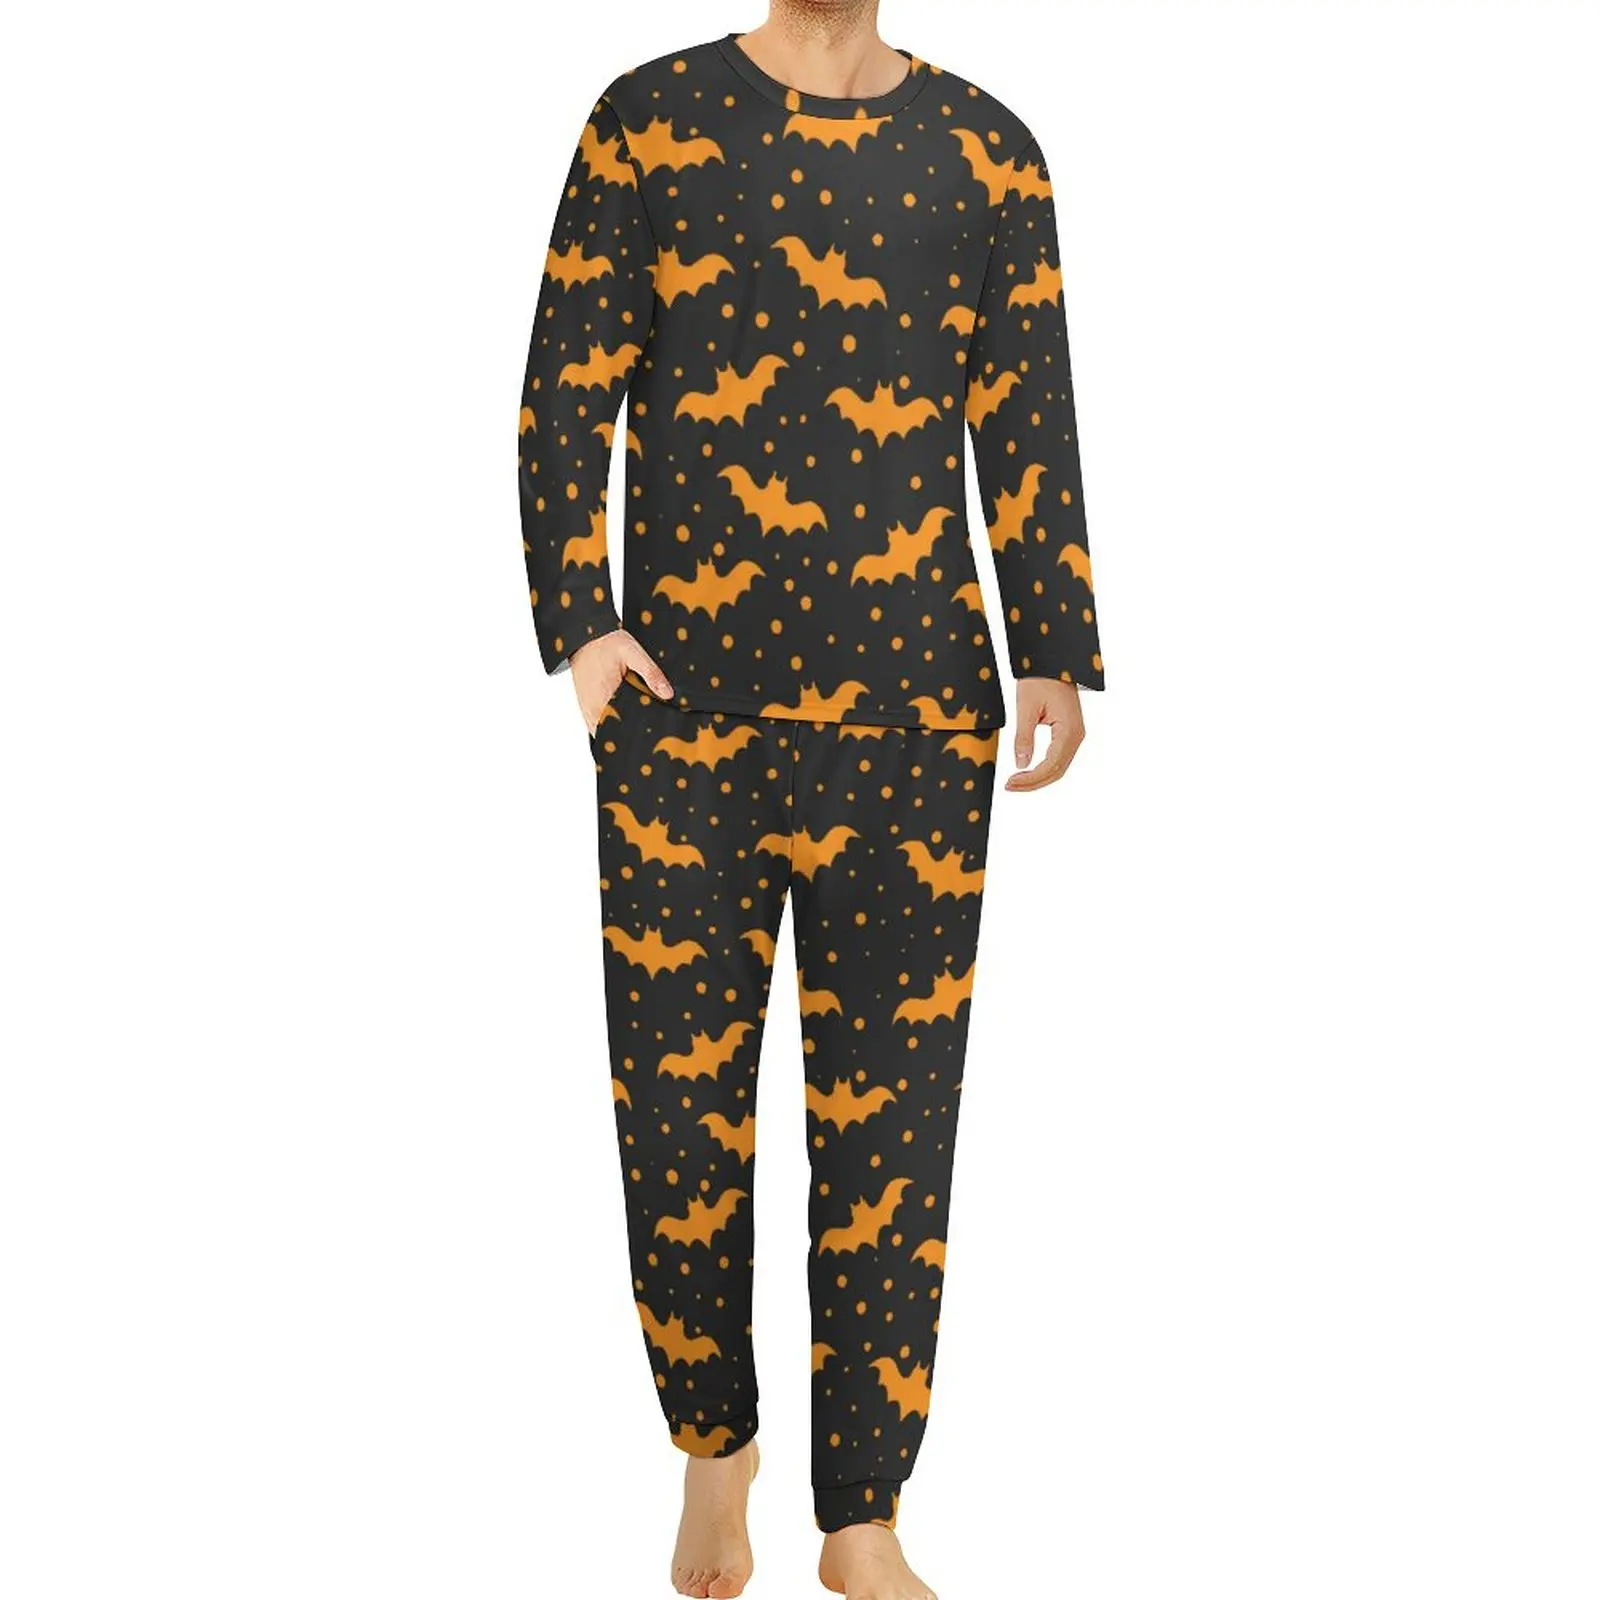 Orange Bats Print Pajamas Daily Black Halloween Night Nightwear Men 2 Piece Graphic Long Sleeves Soft Oversized Pajama Sets